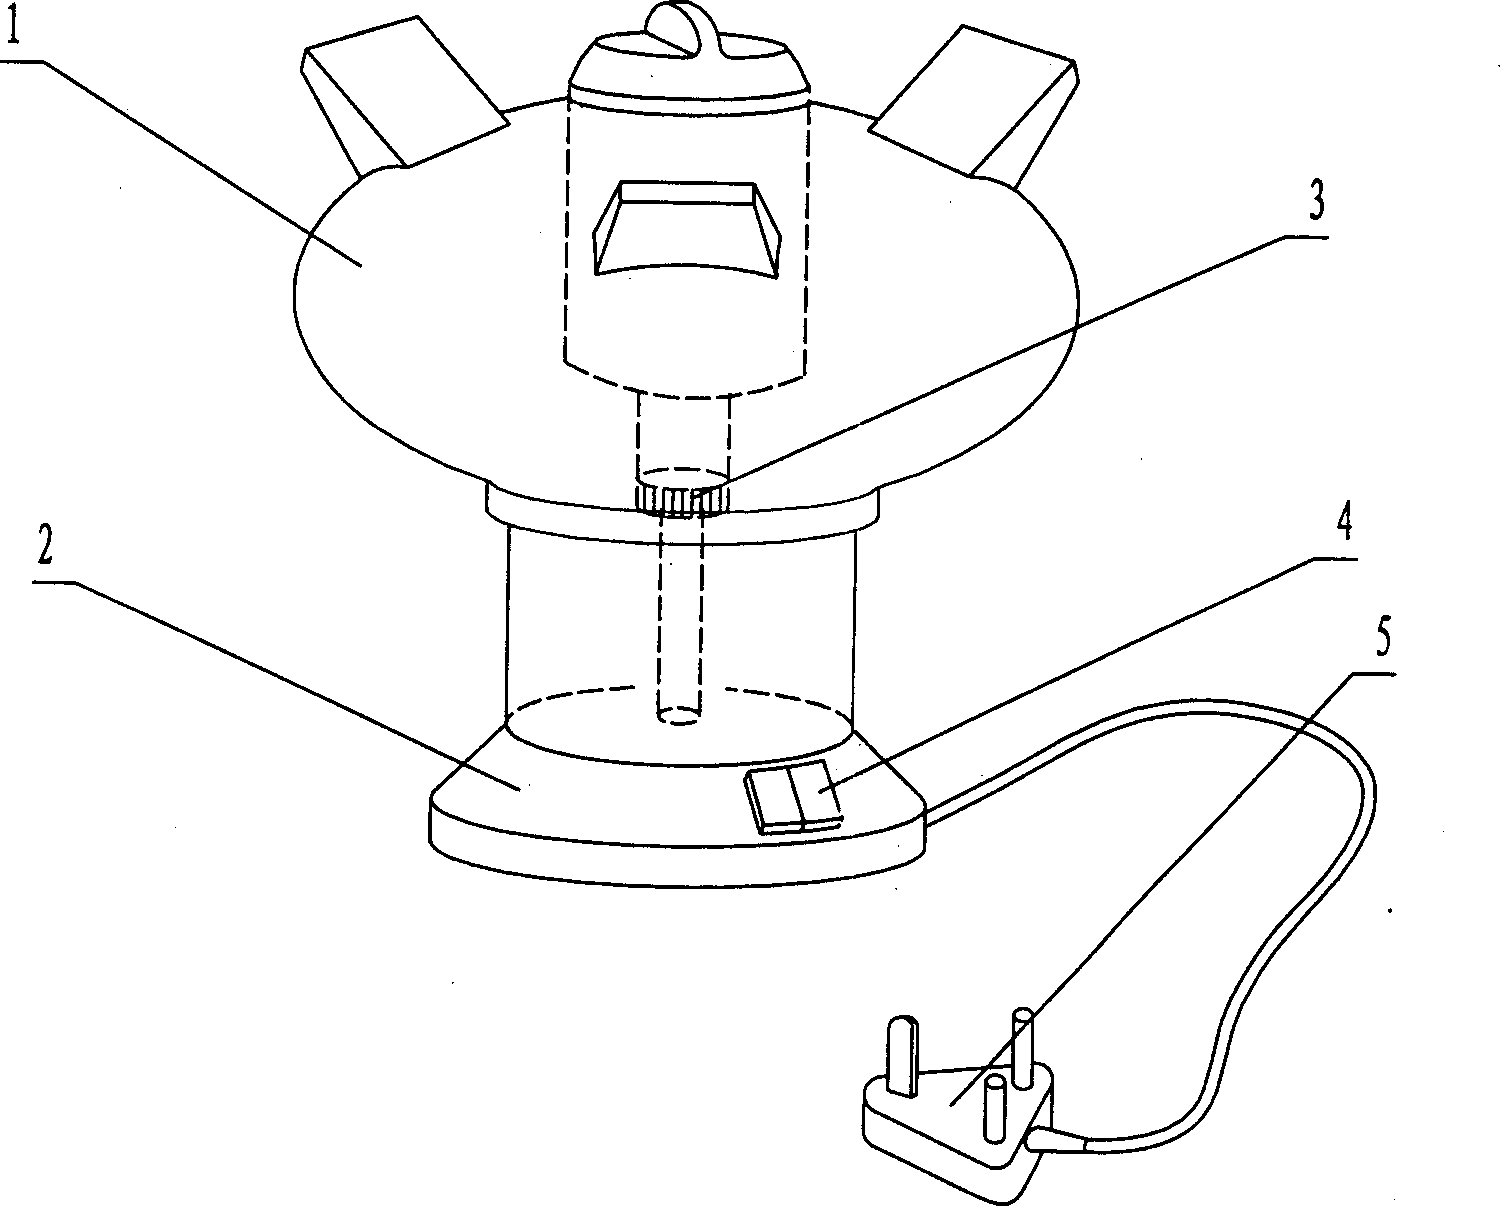 Humidifier with rotation sprayer